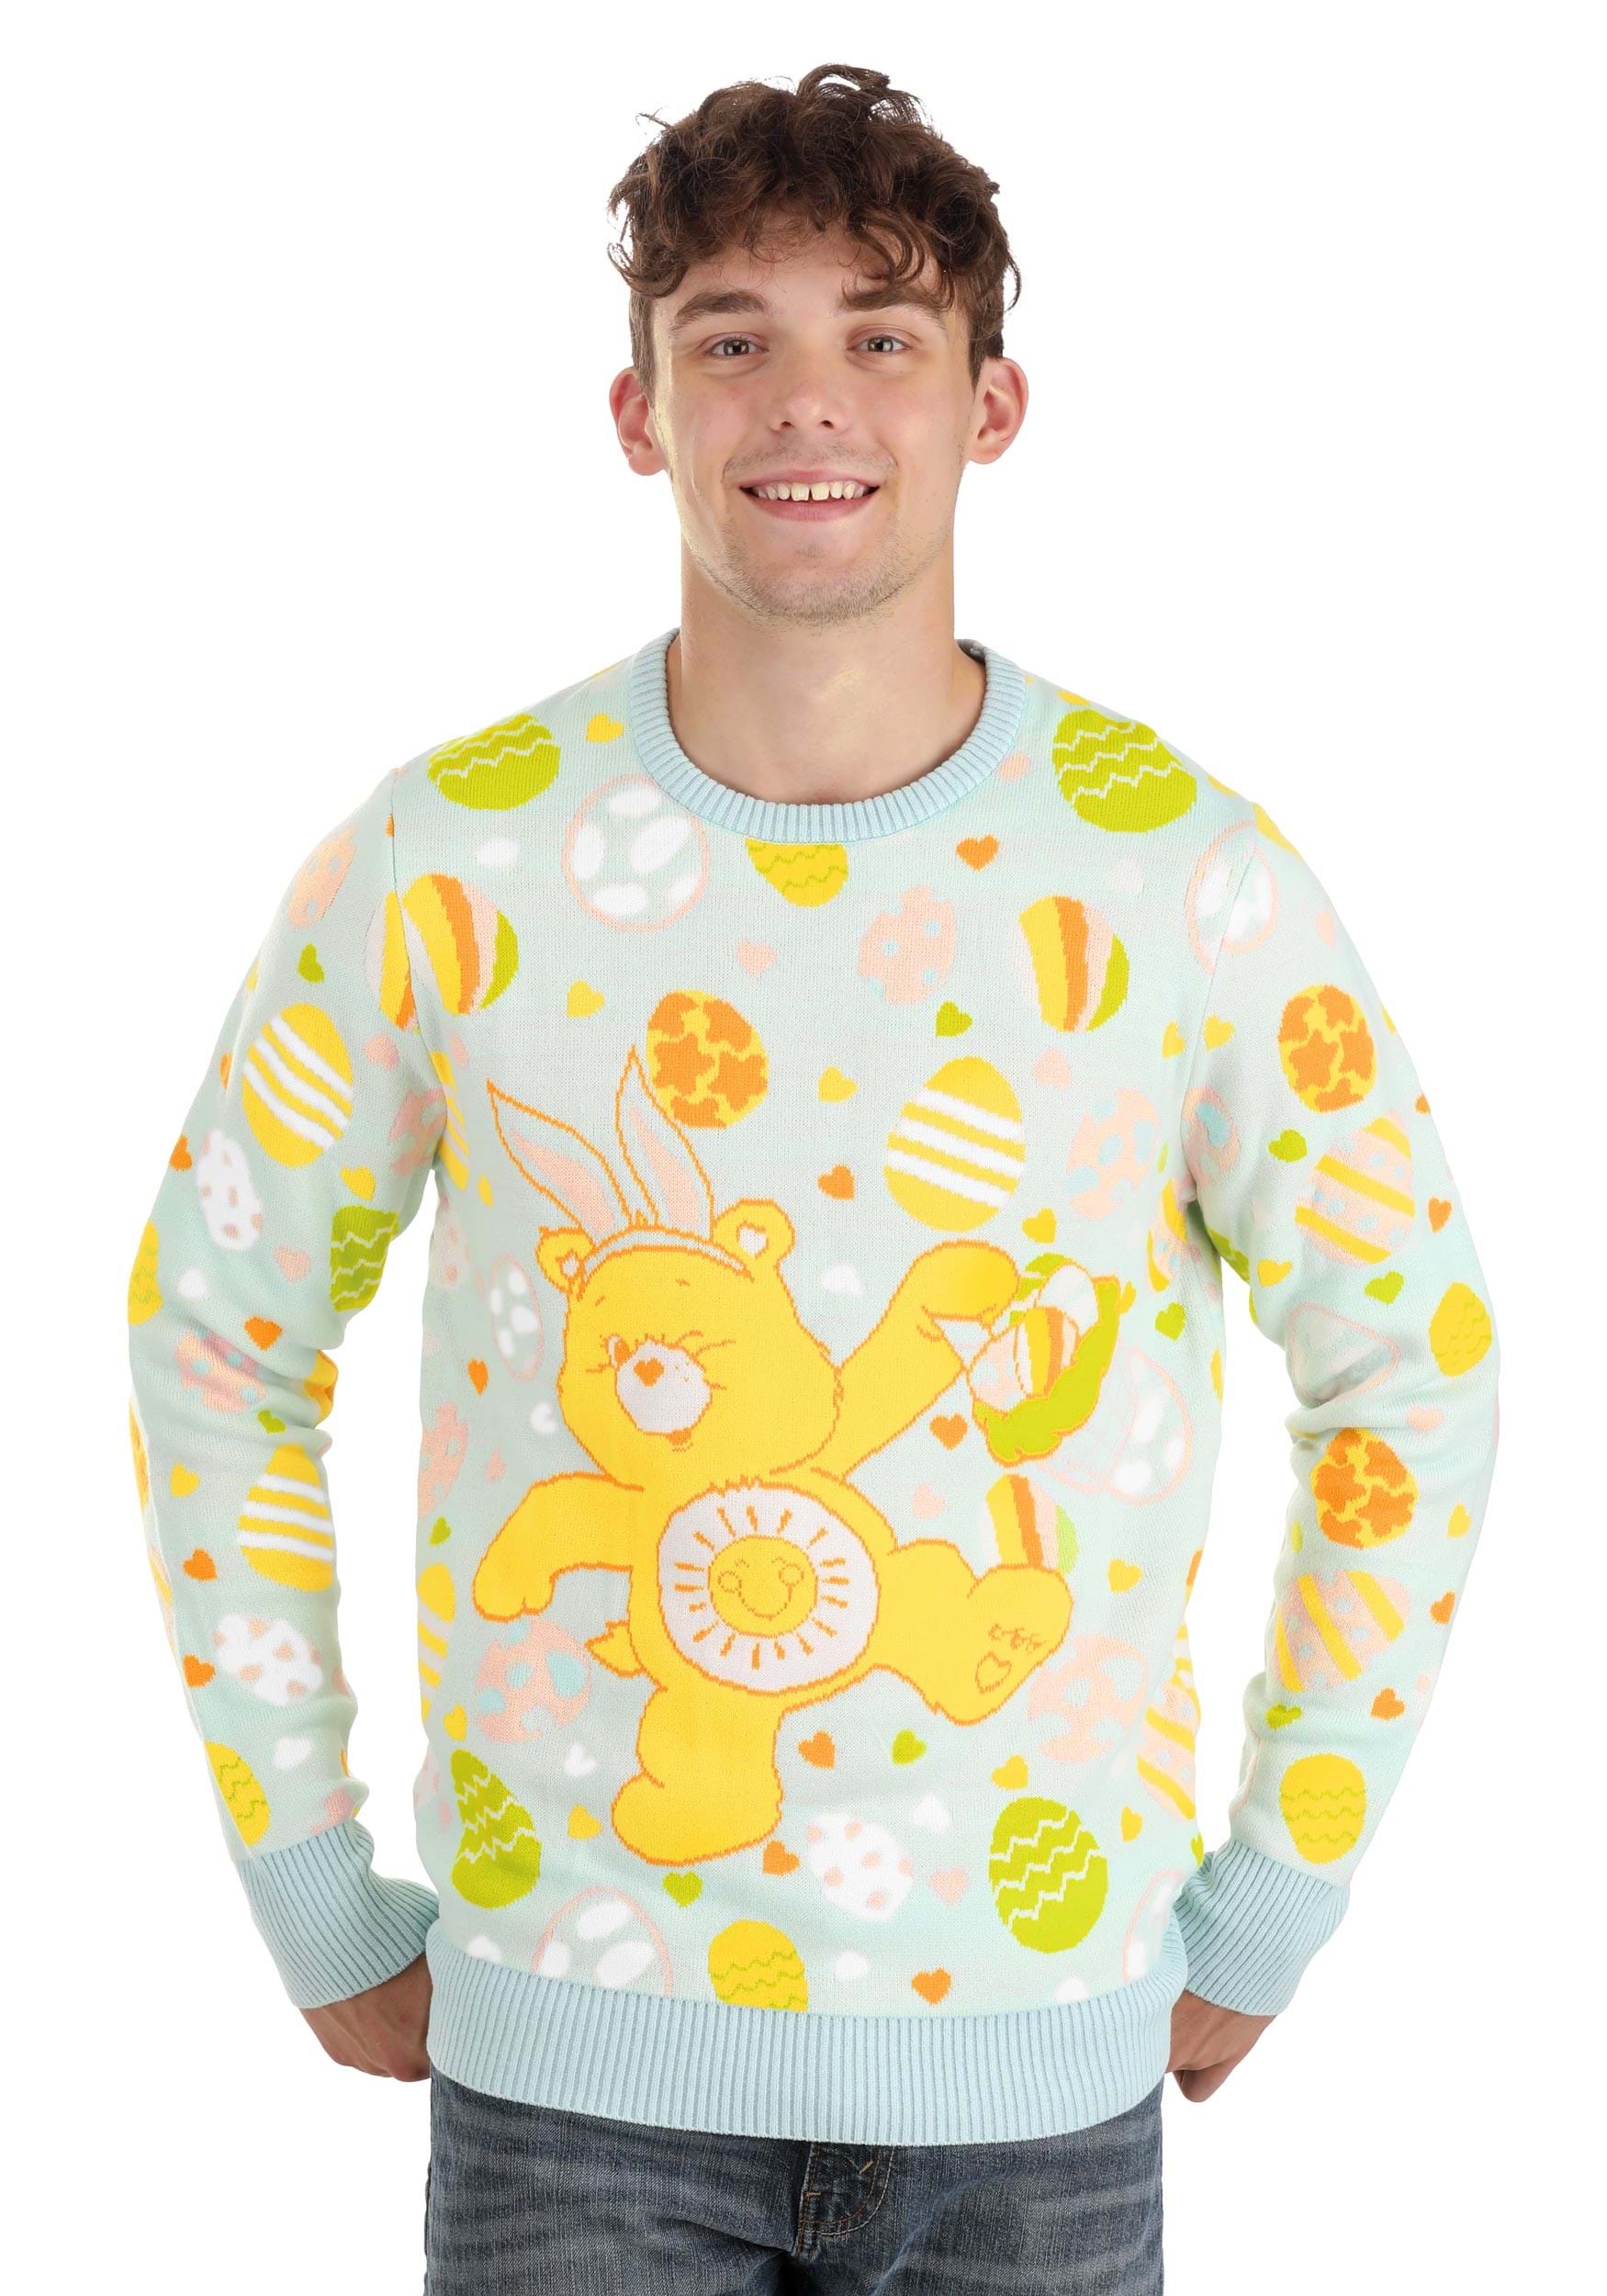 Photos - Fancy Dress CARE FUN Wear  Bears Adult Easter Egg Hunt Ugly Sweater |  Bear Apparel 